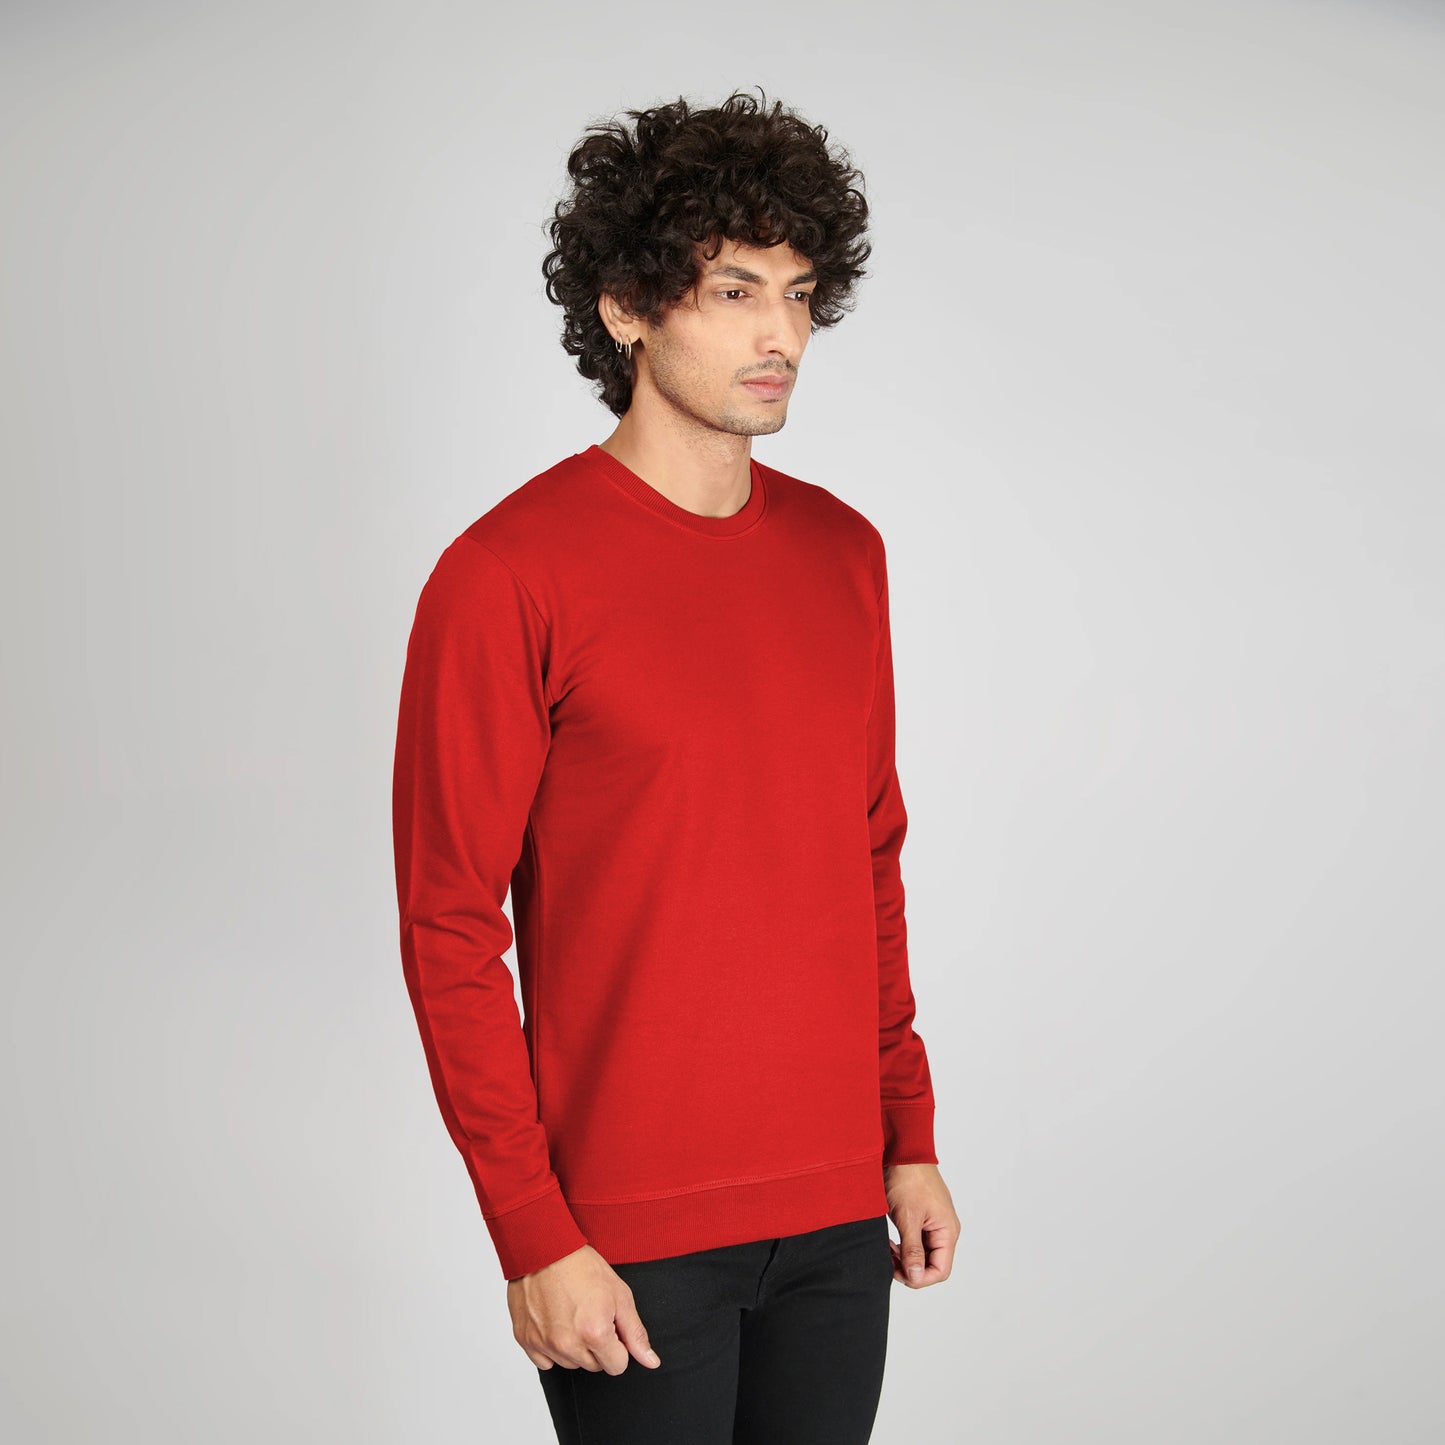 Basic Red Sweatshirt